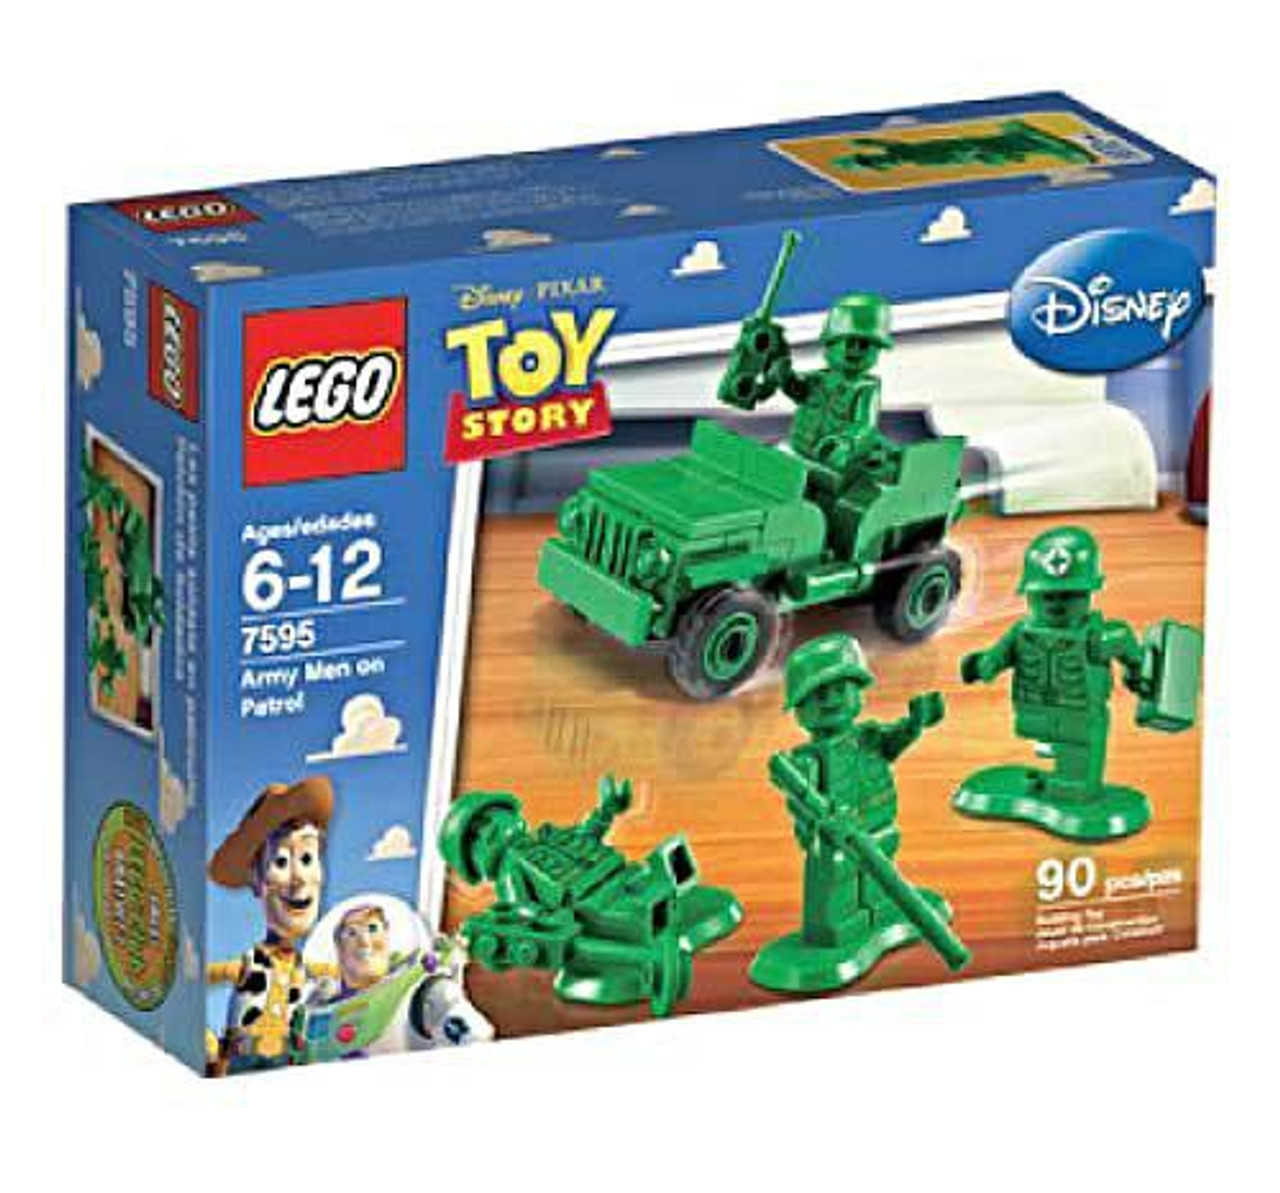 Toy Story Lego Army Men - Army Military